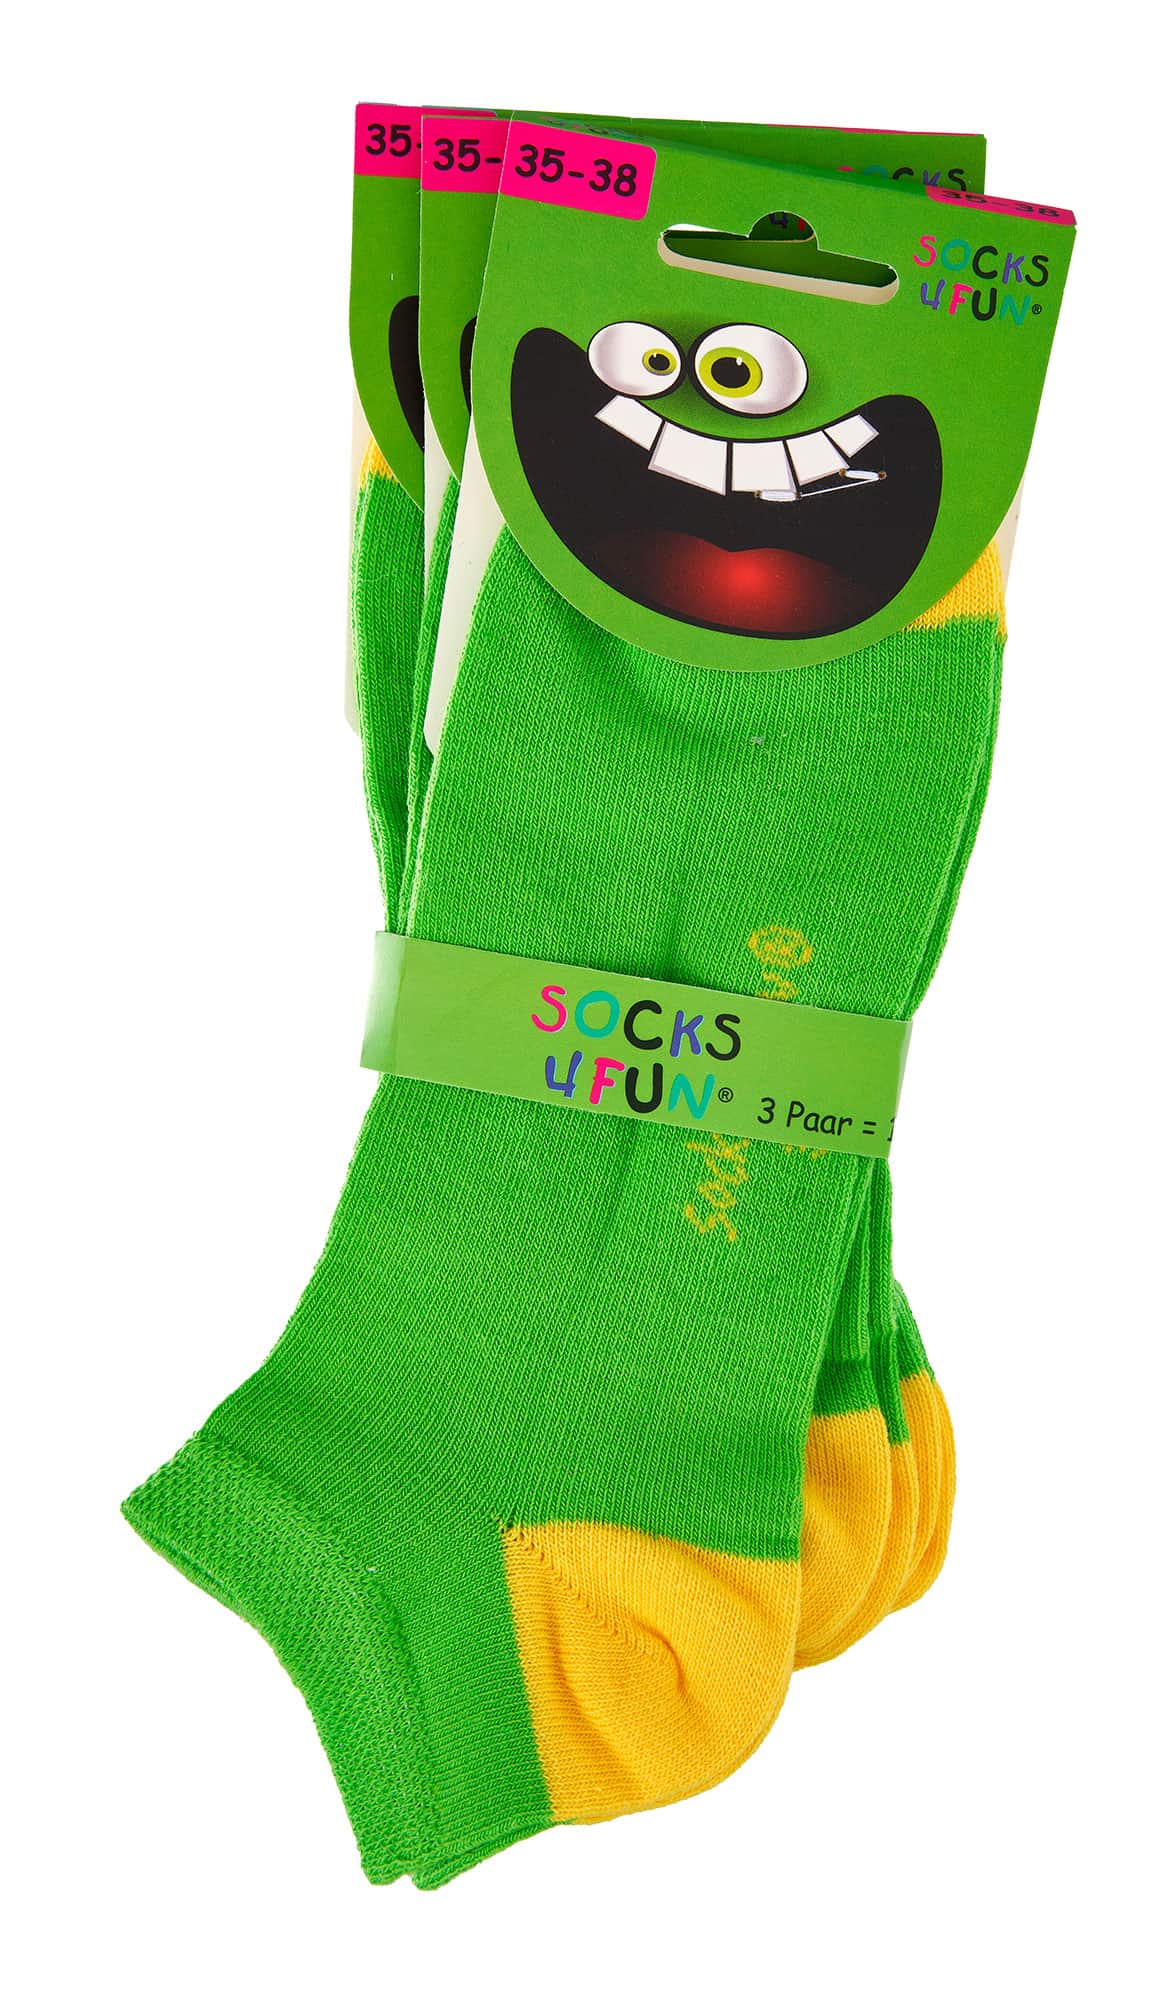 Computer-Kinder Sneakers-Socken „Gute Laune-Farben“ 3 Paar/ 1 Grundfarbe